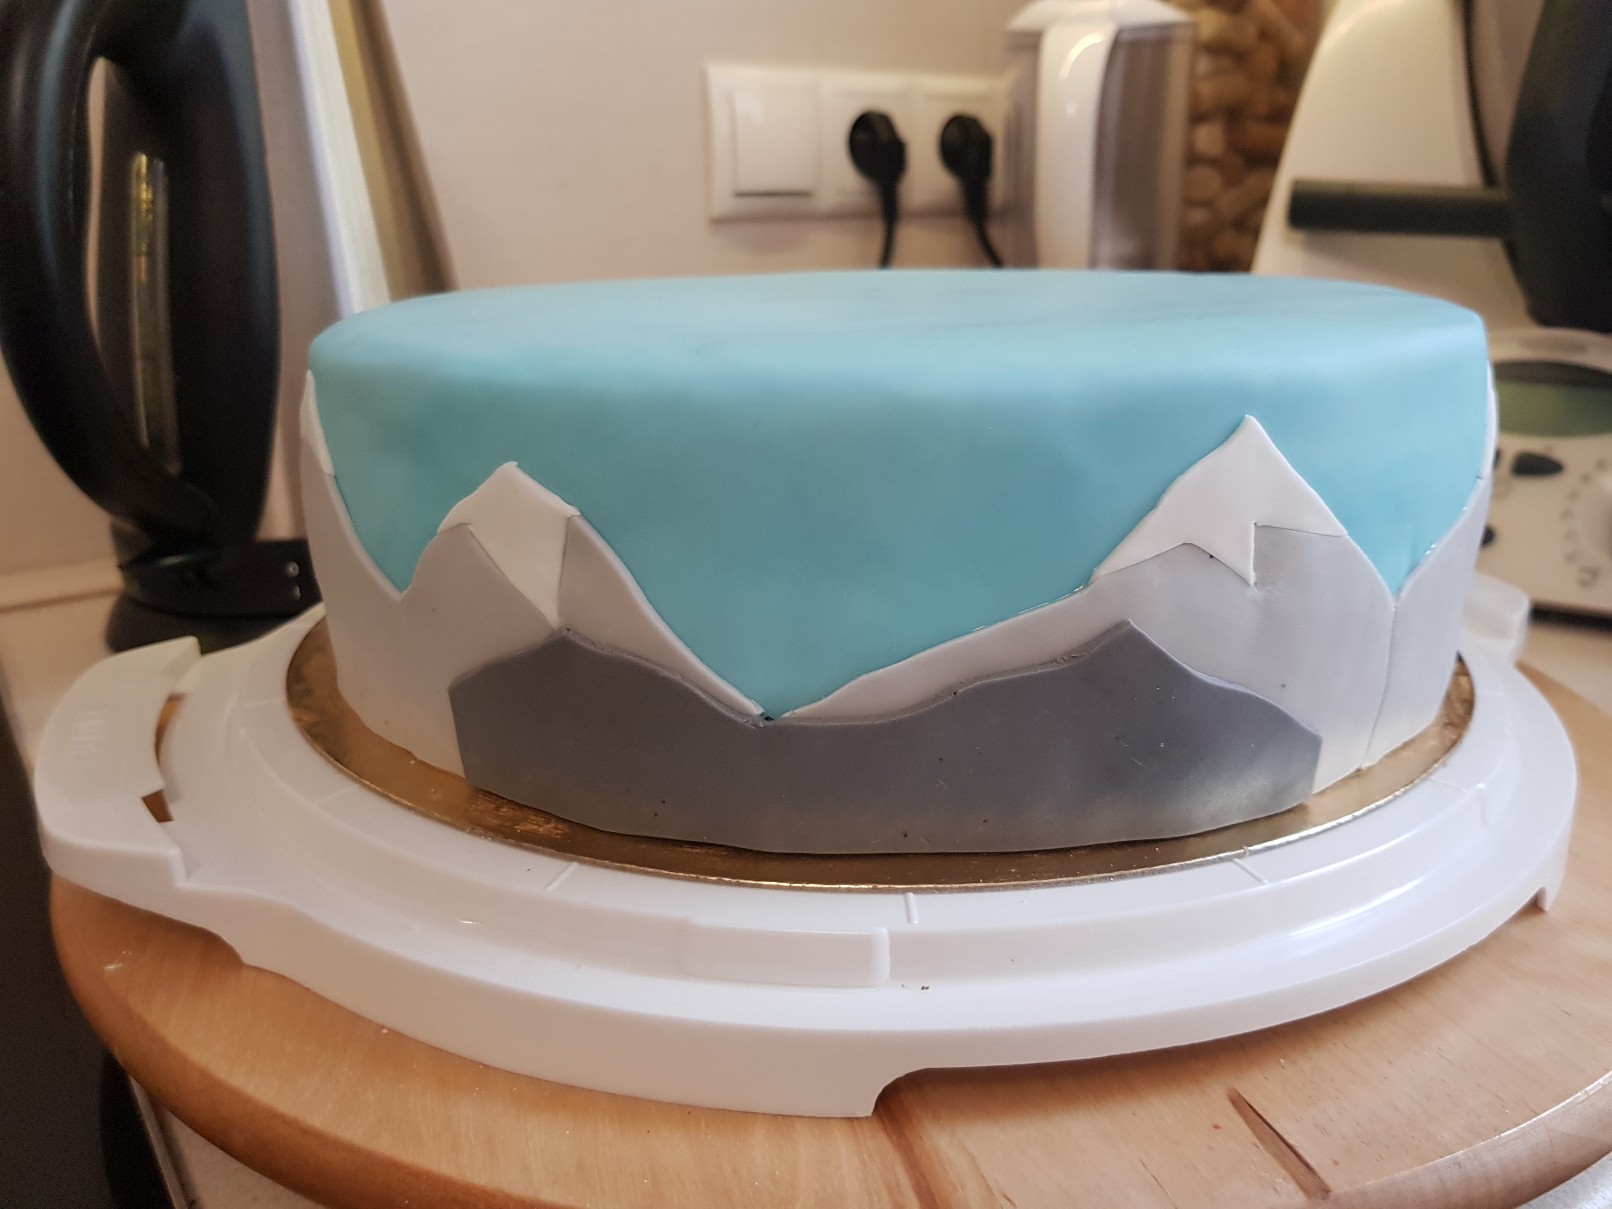 mountain birthday cake second layer